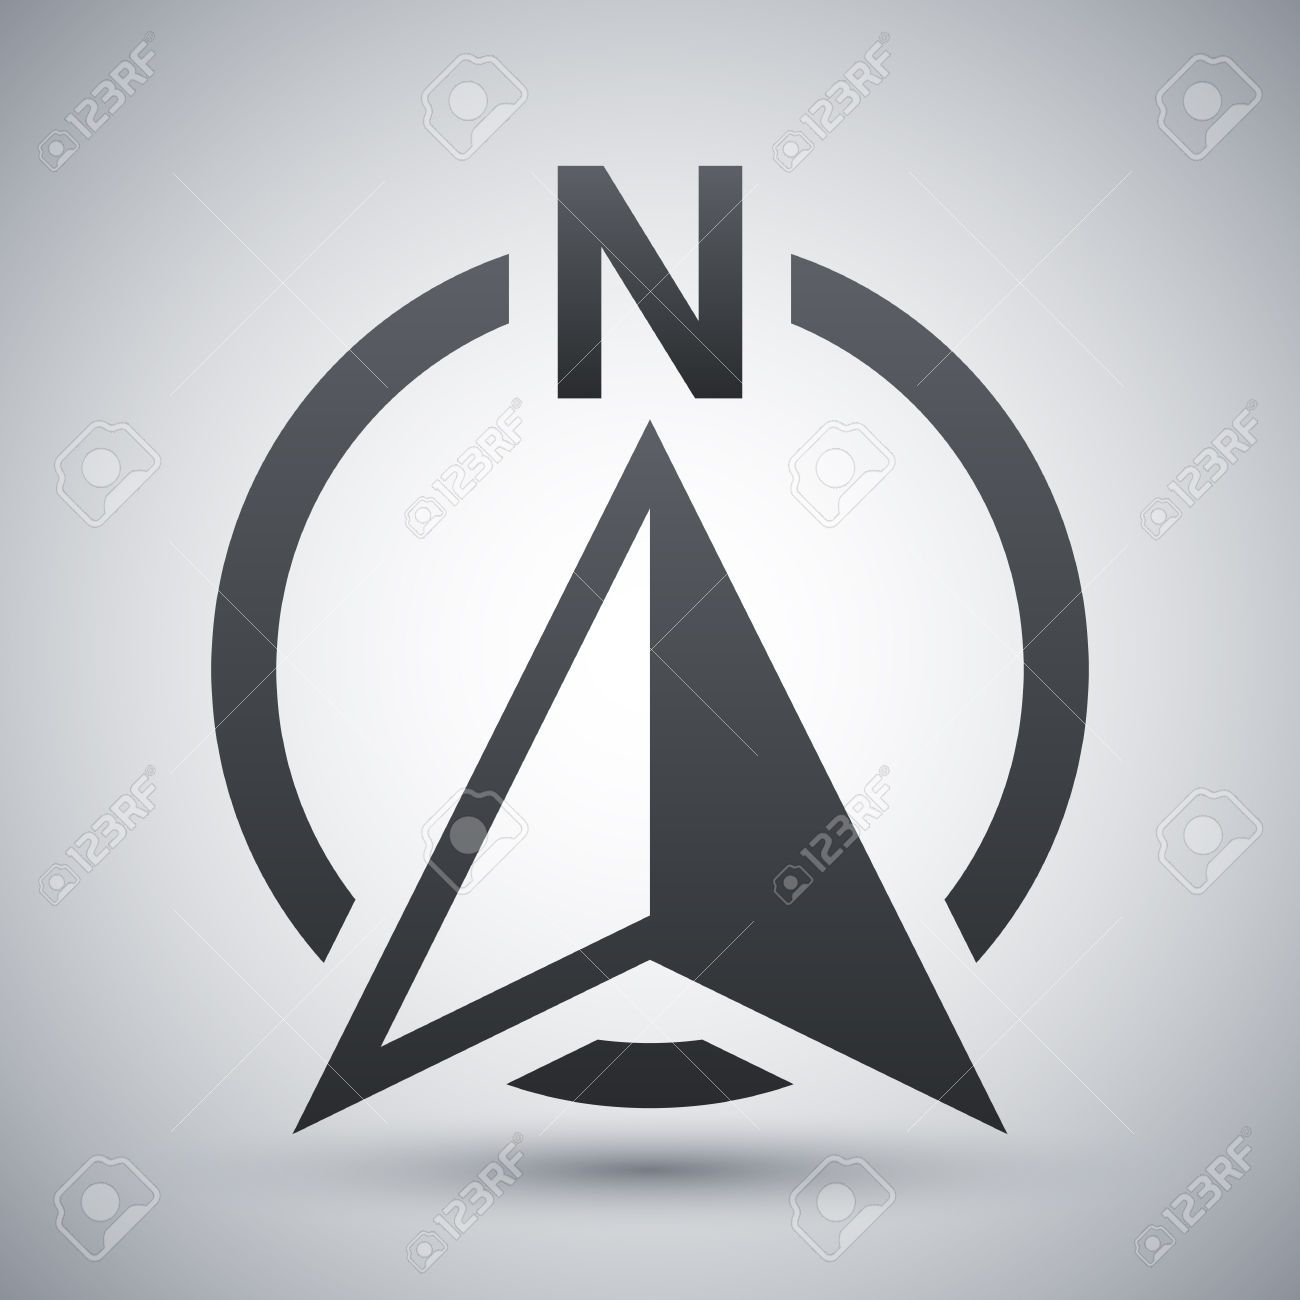 Font,Symbol,Sign,Logo,Line,Illustration,Black-and-white,Triangle,Graphics,Arrow,Graphic design,Number